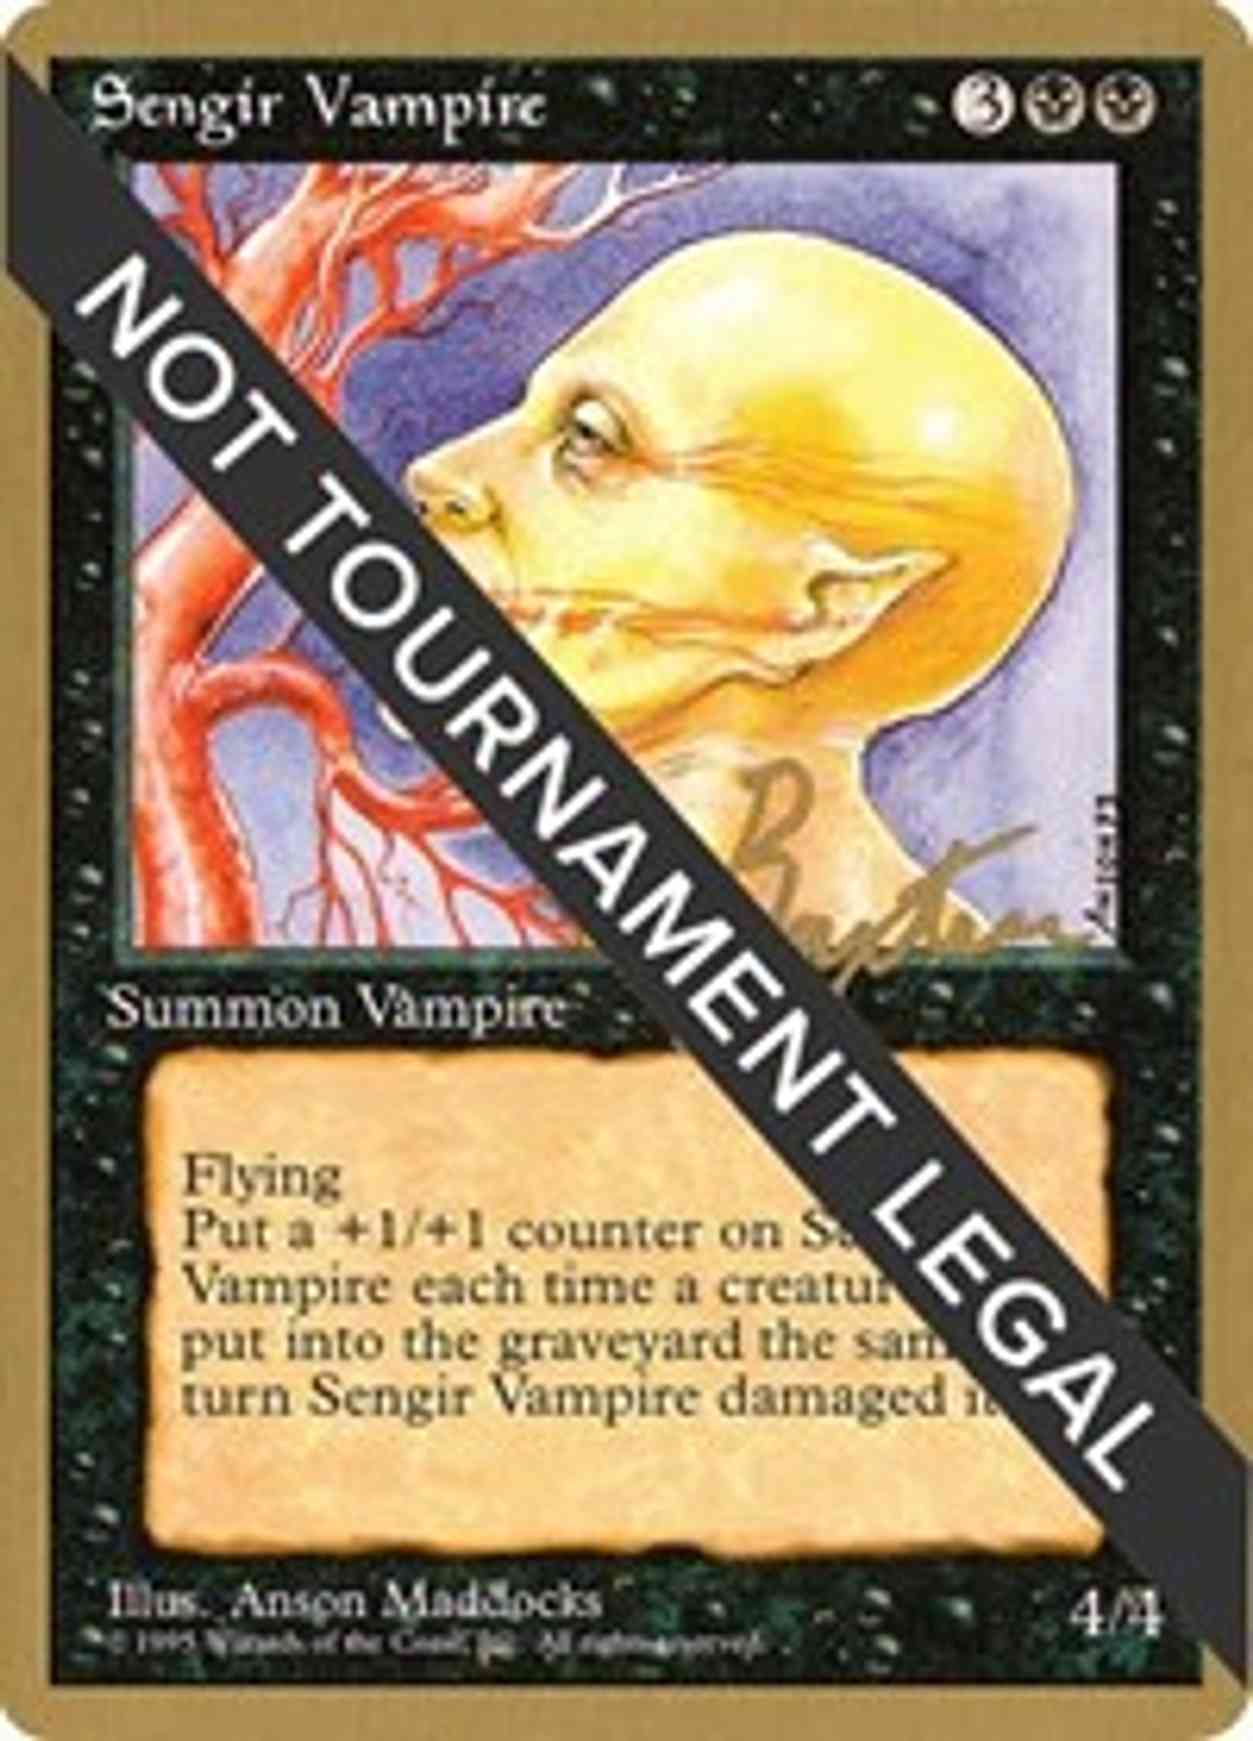 Sengir Vampire - 1996 George Baxter (4ED) magic card front